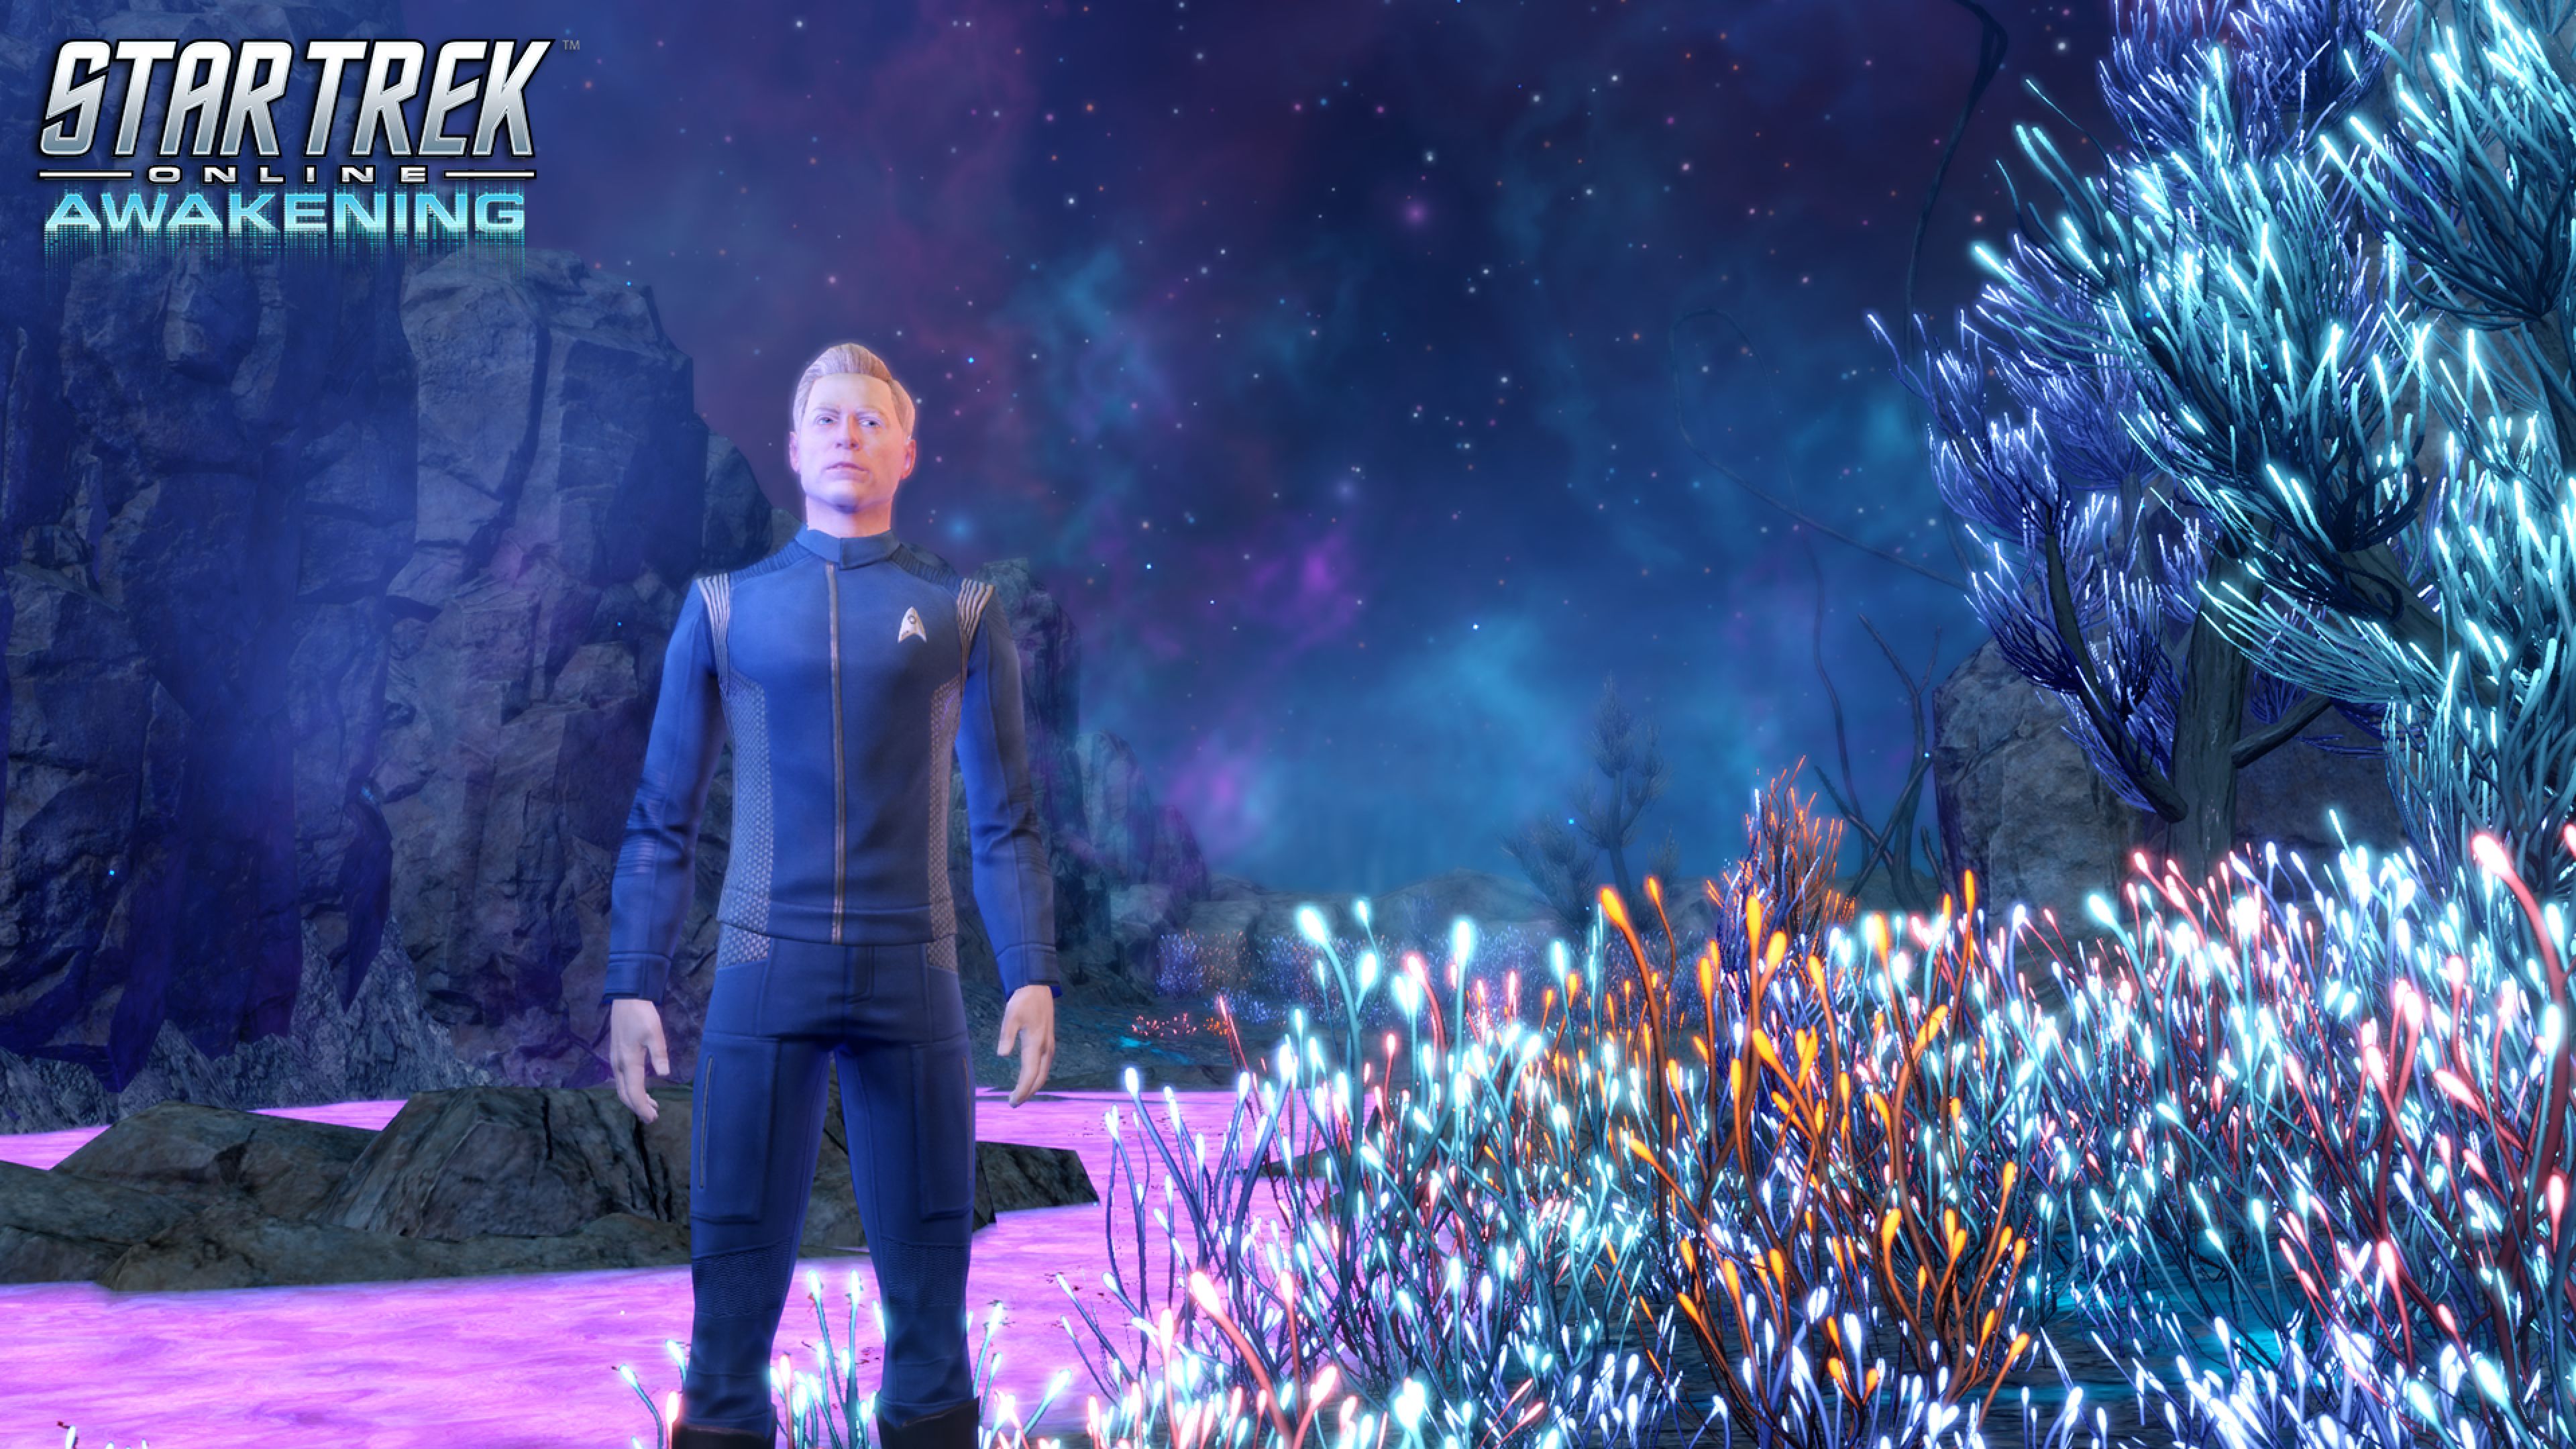 Star Trek Online Awakening 4K Wallpaper, HD Games 4K Wallpaper, Image, Photo and Background